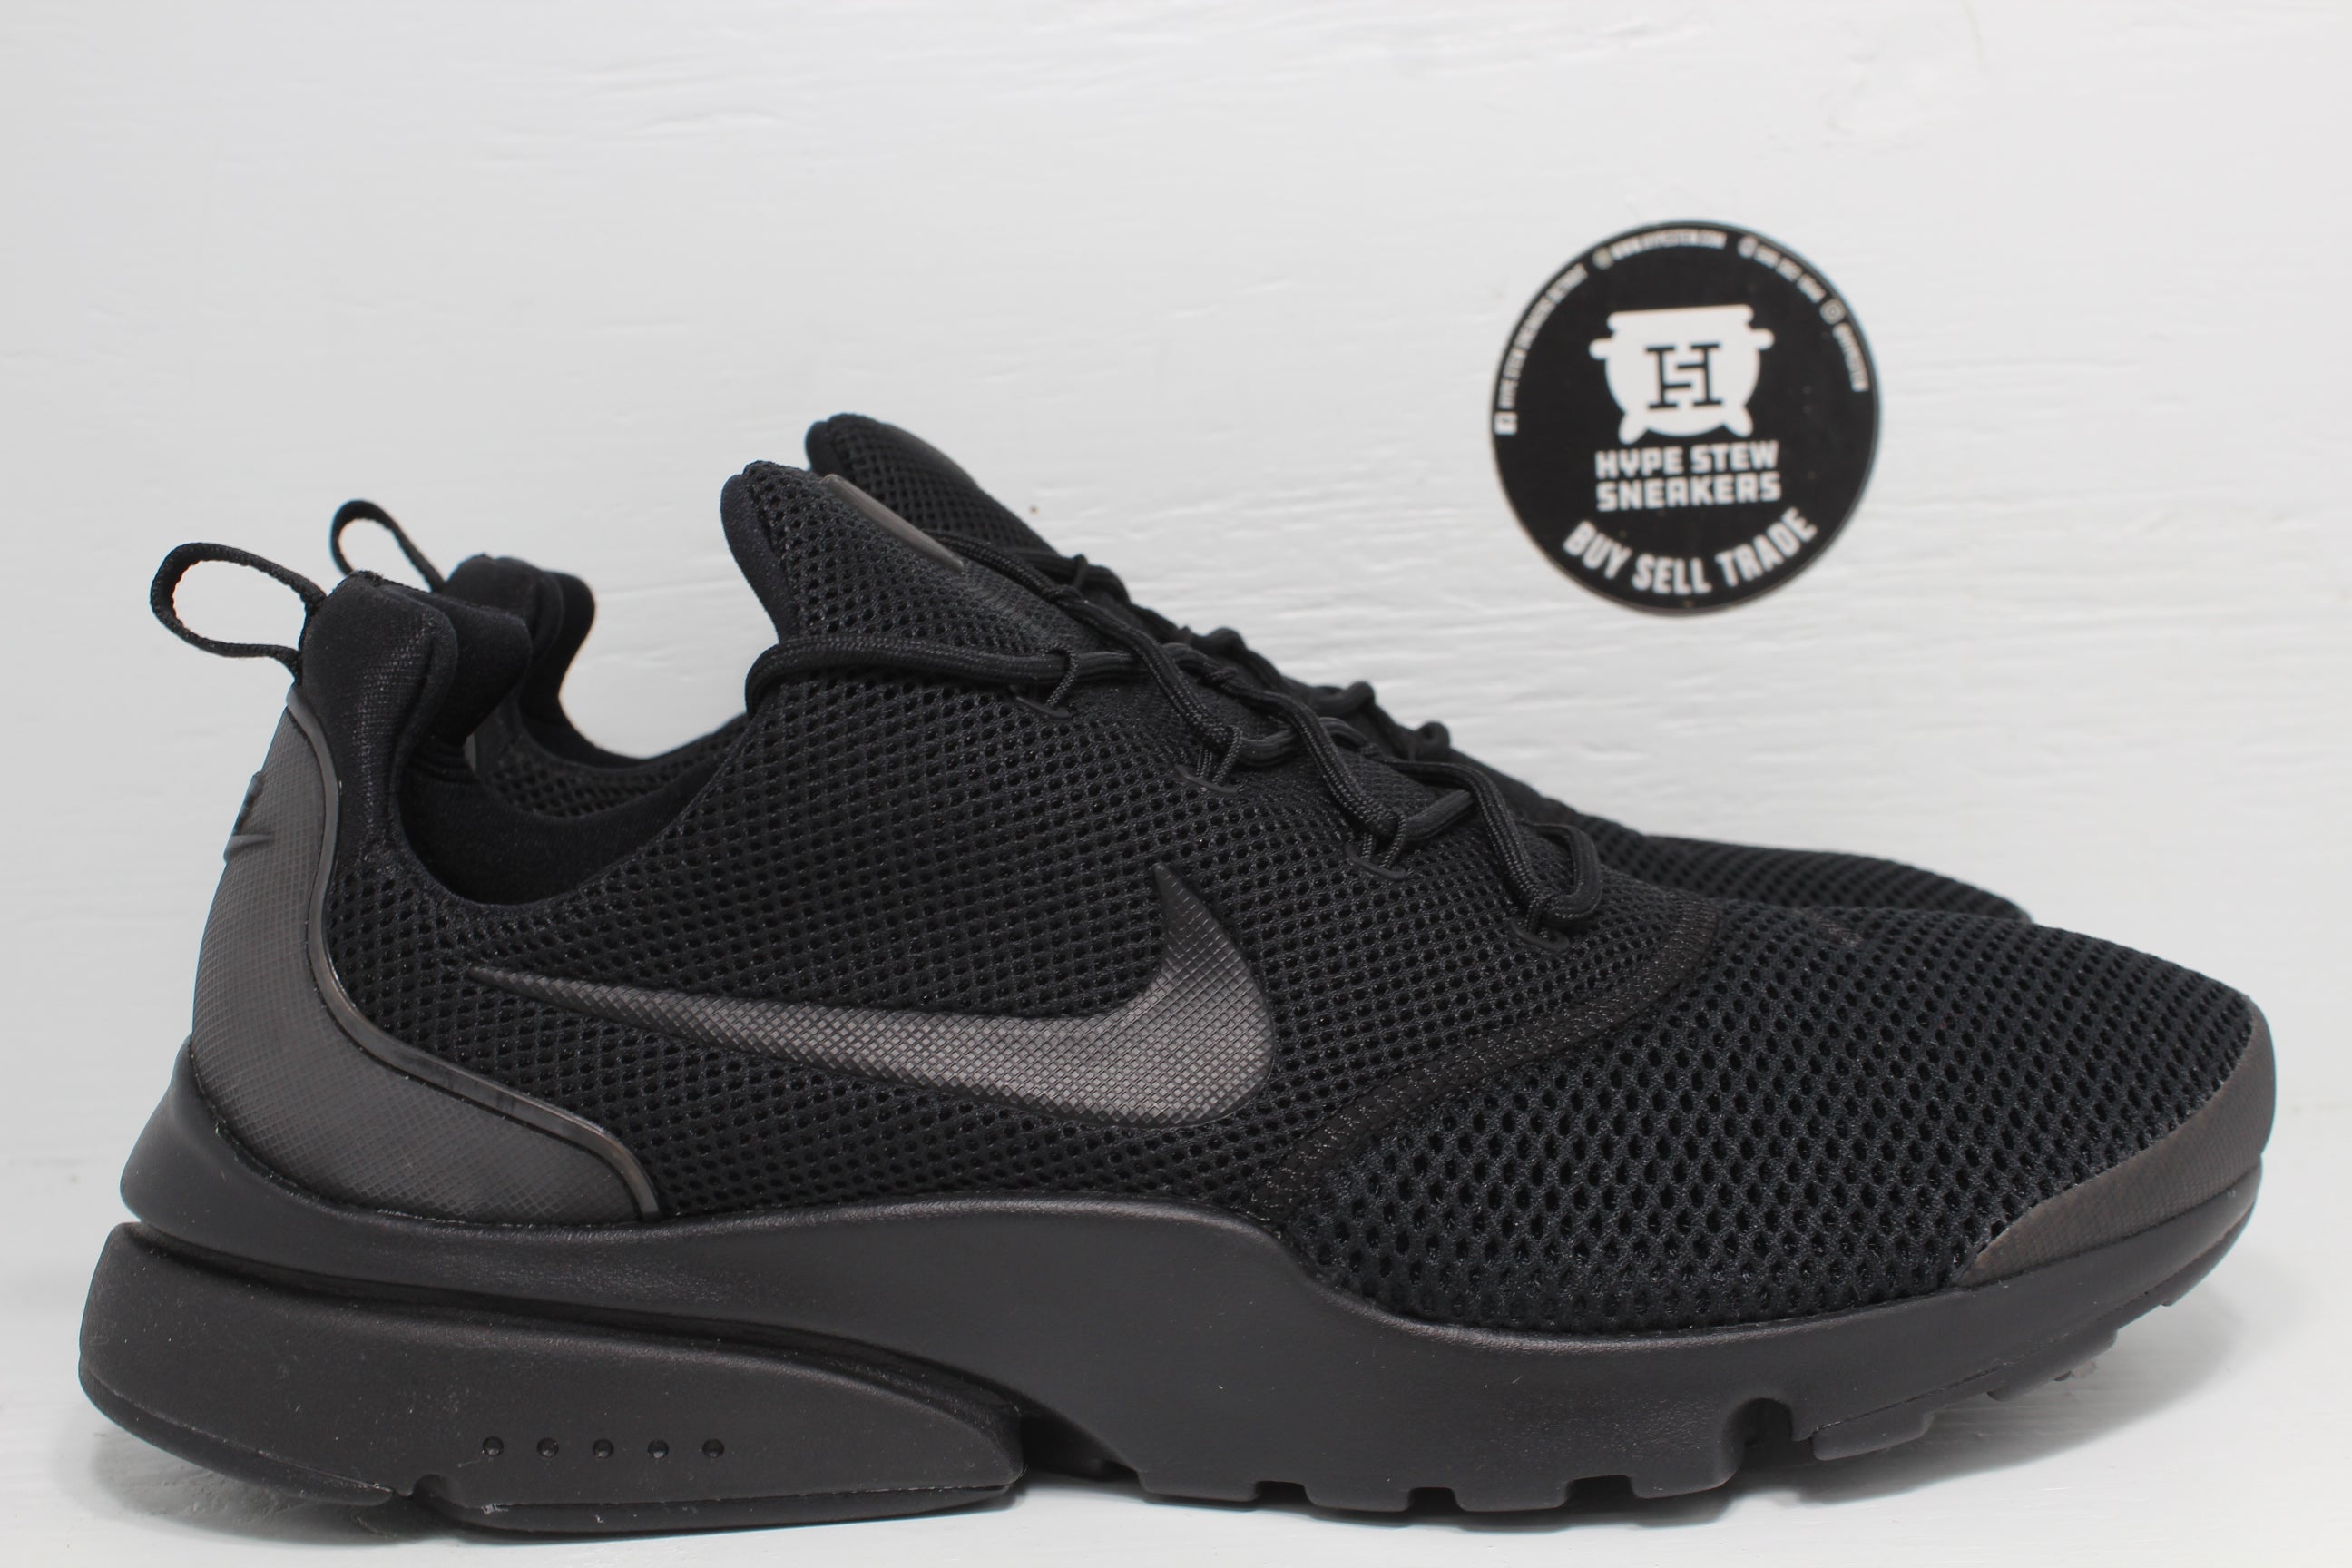 Nike Presto Black/Black-Black | Hype Stew Sneakers Detroit